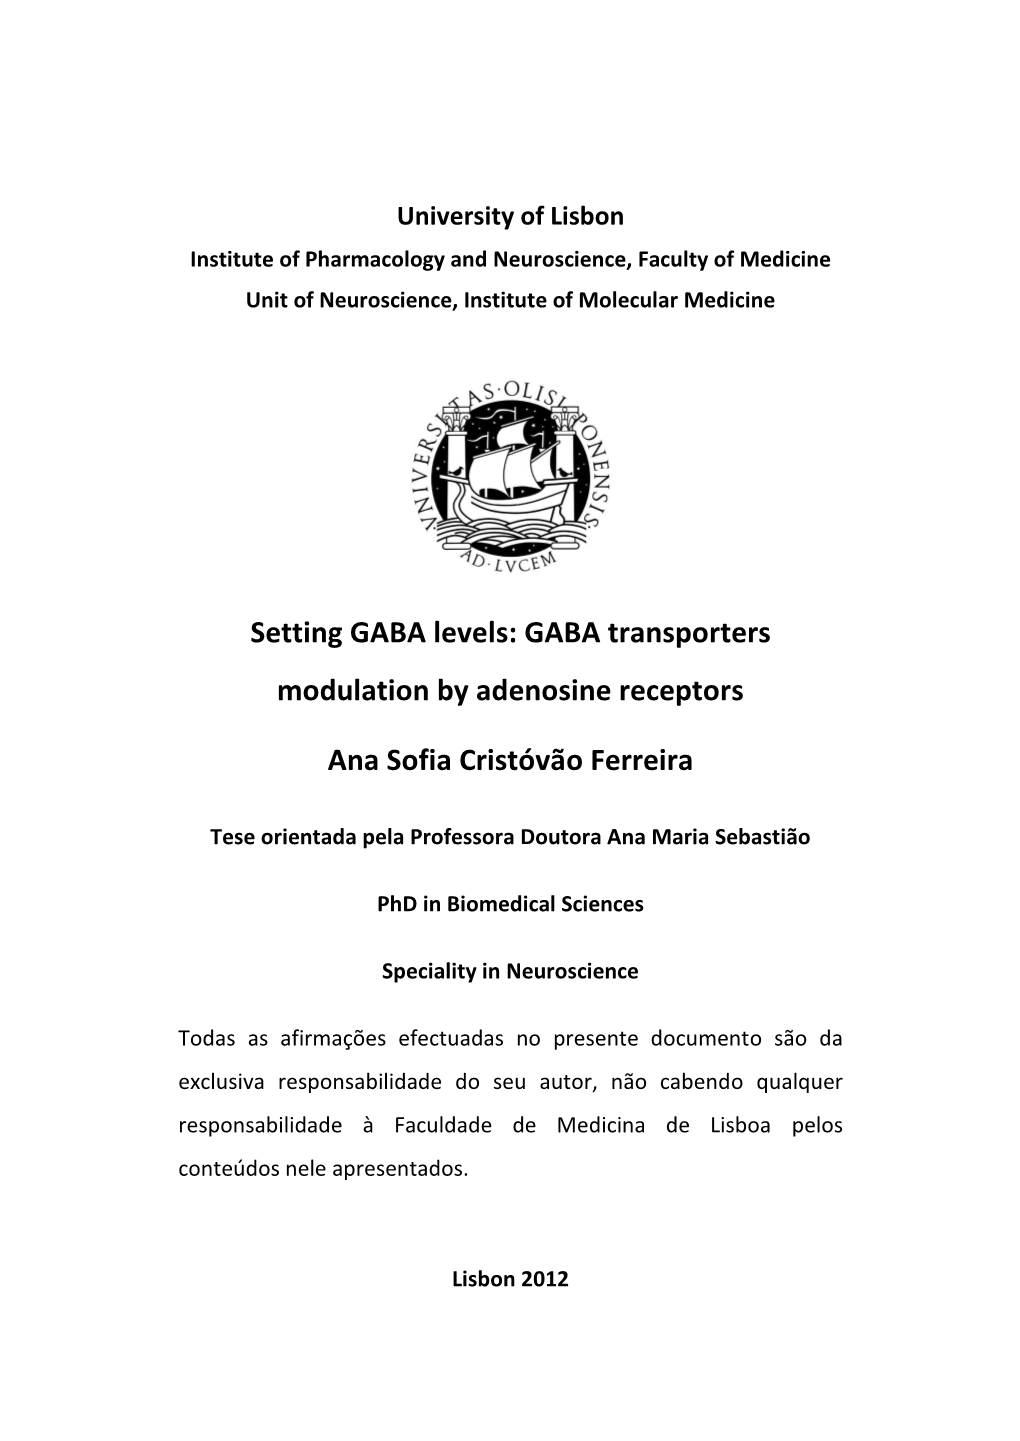 Setting GABA Levels: GABA Transporters Modulation by Adenosine Receptors